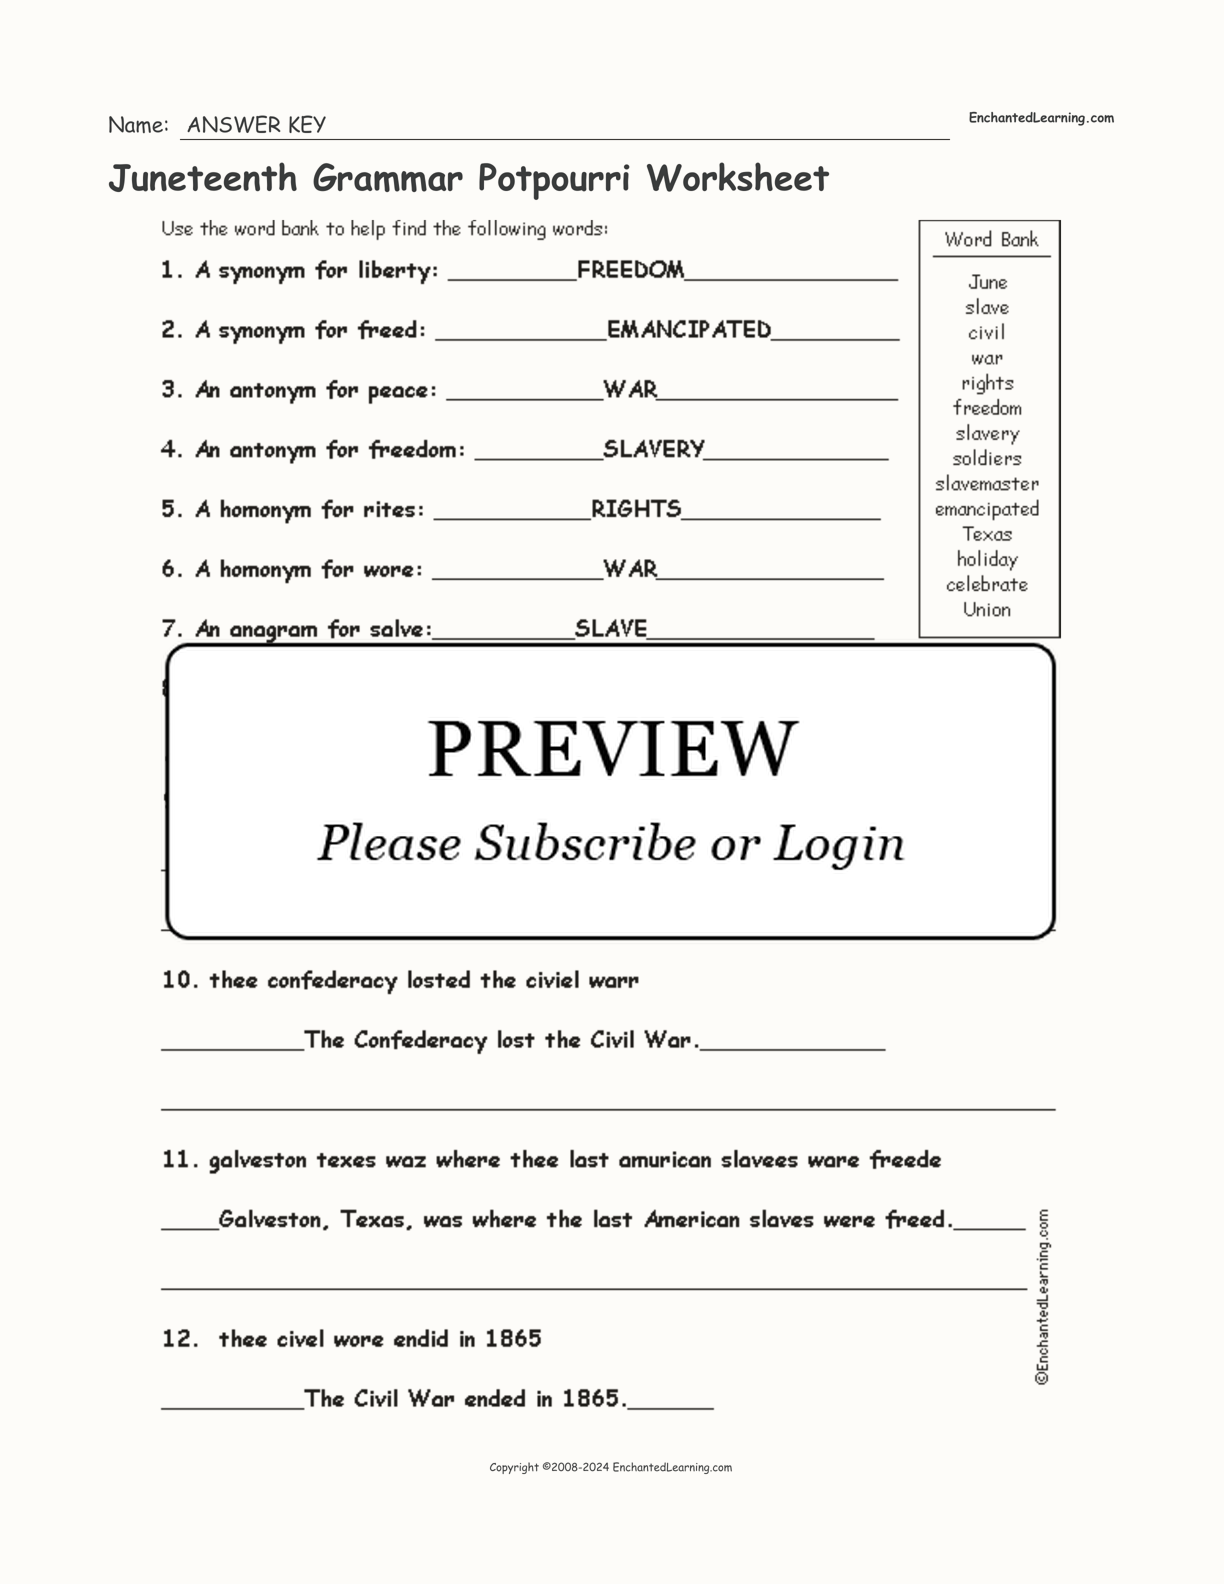 Juneteenth Grammar Potpourri Worksheet interactive worksheet page 2